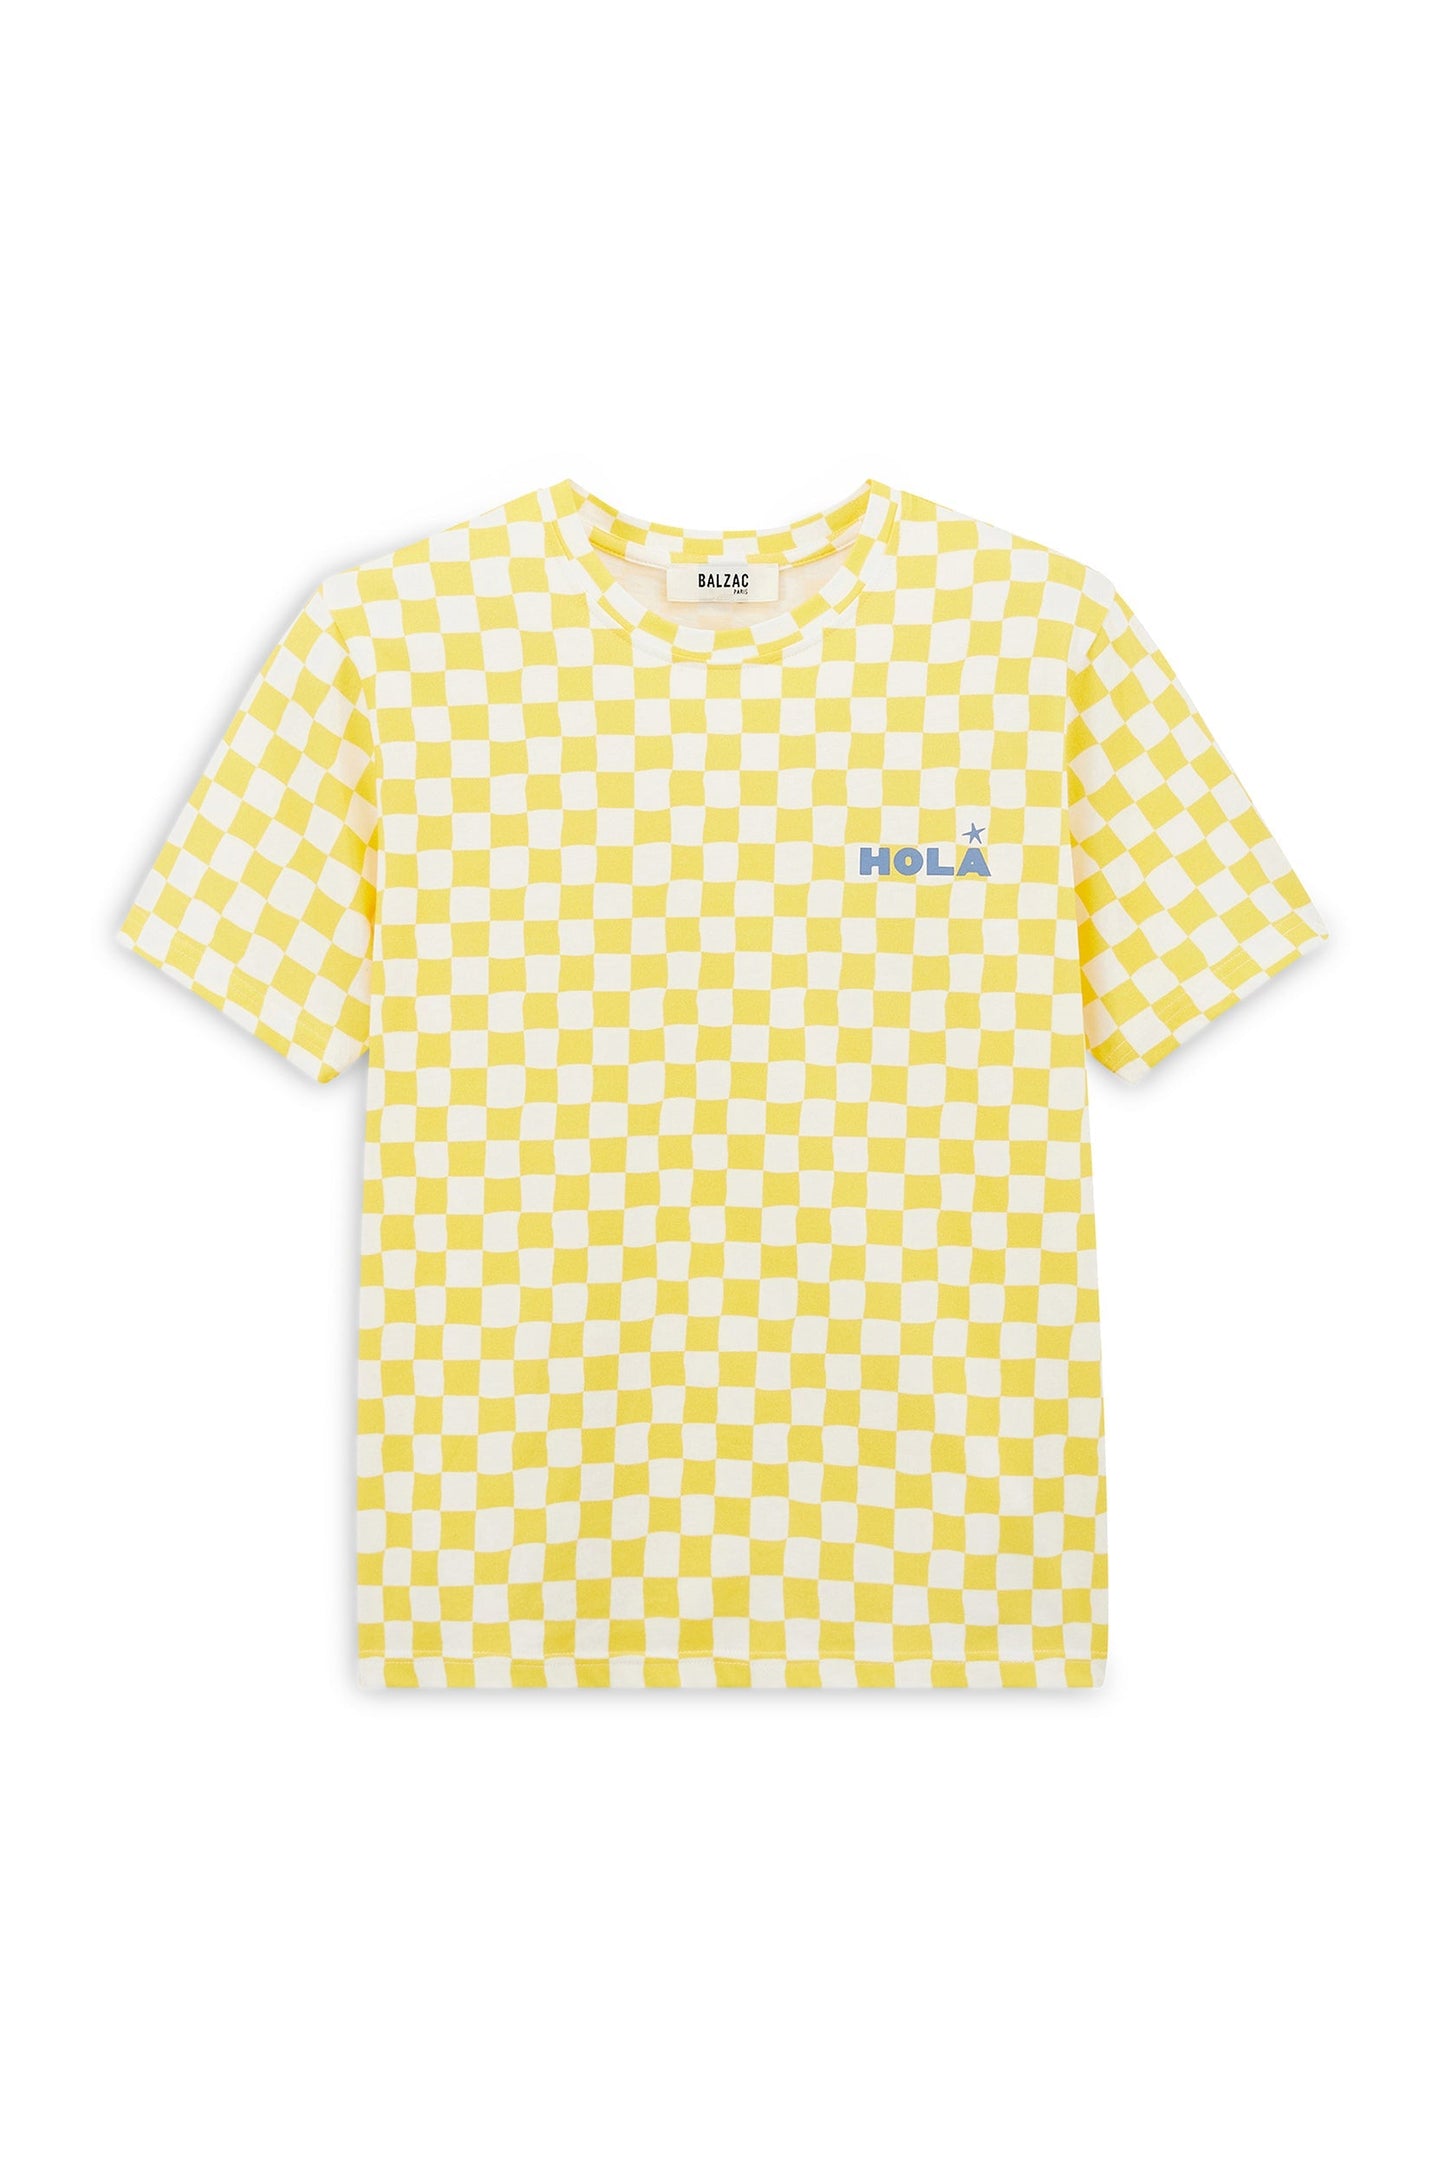 Tee-shirt Bree Hola jaune et blanc